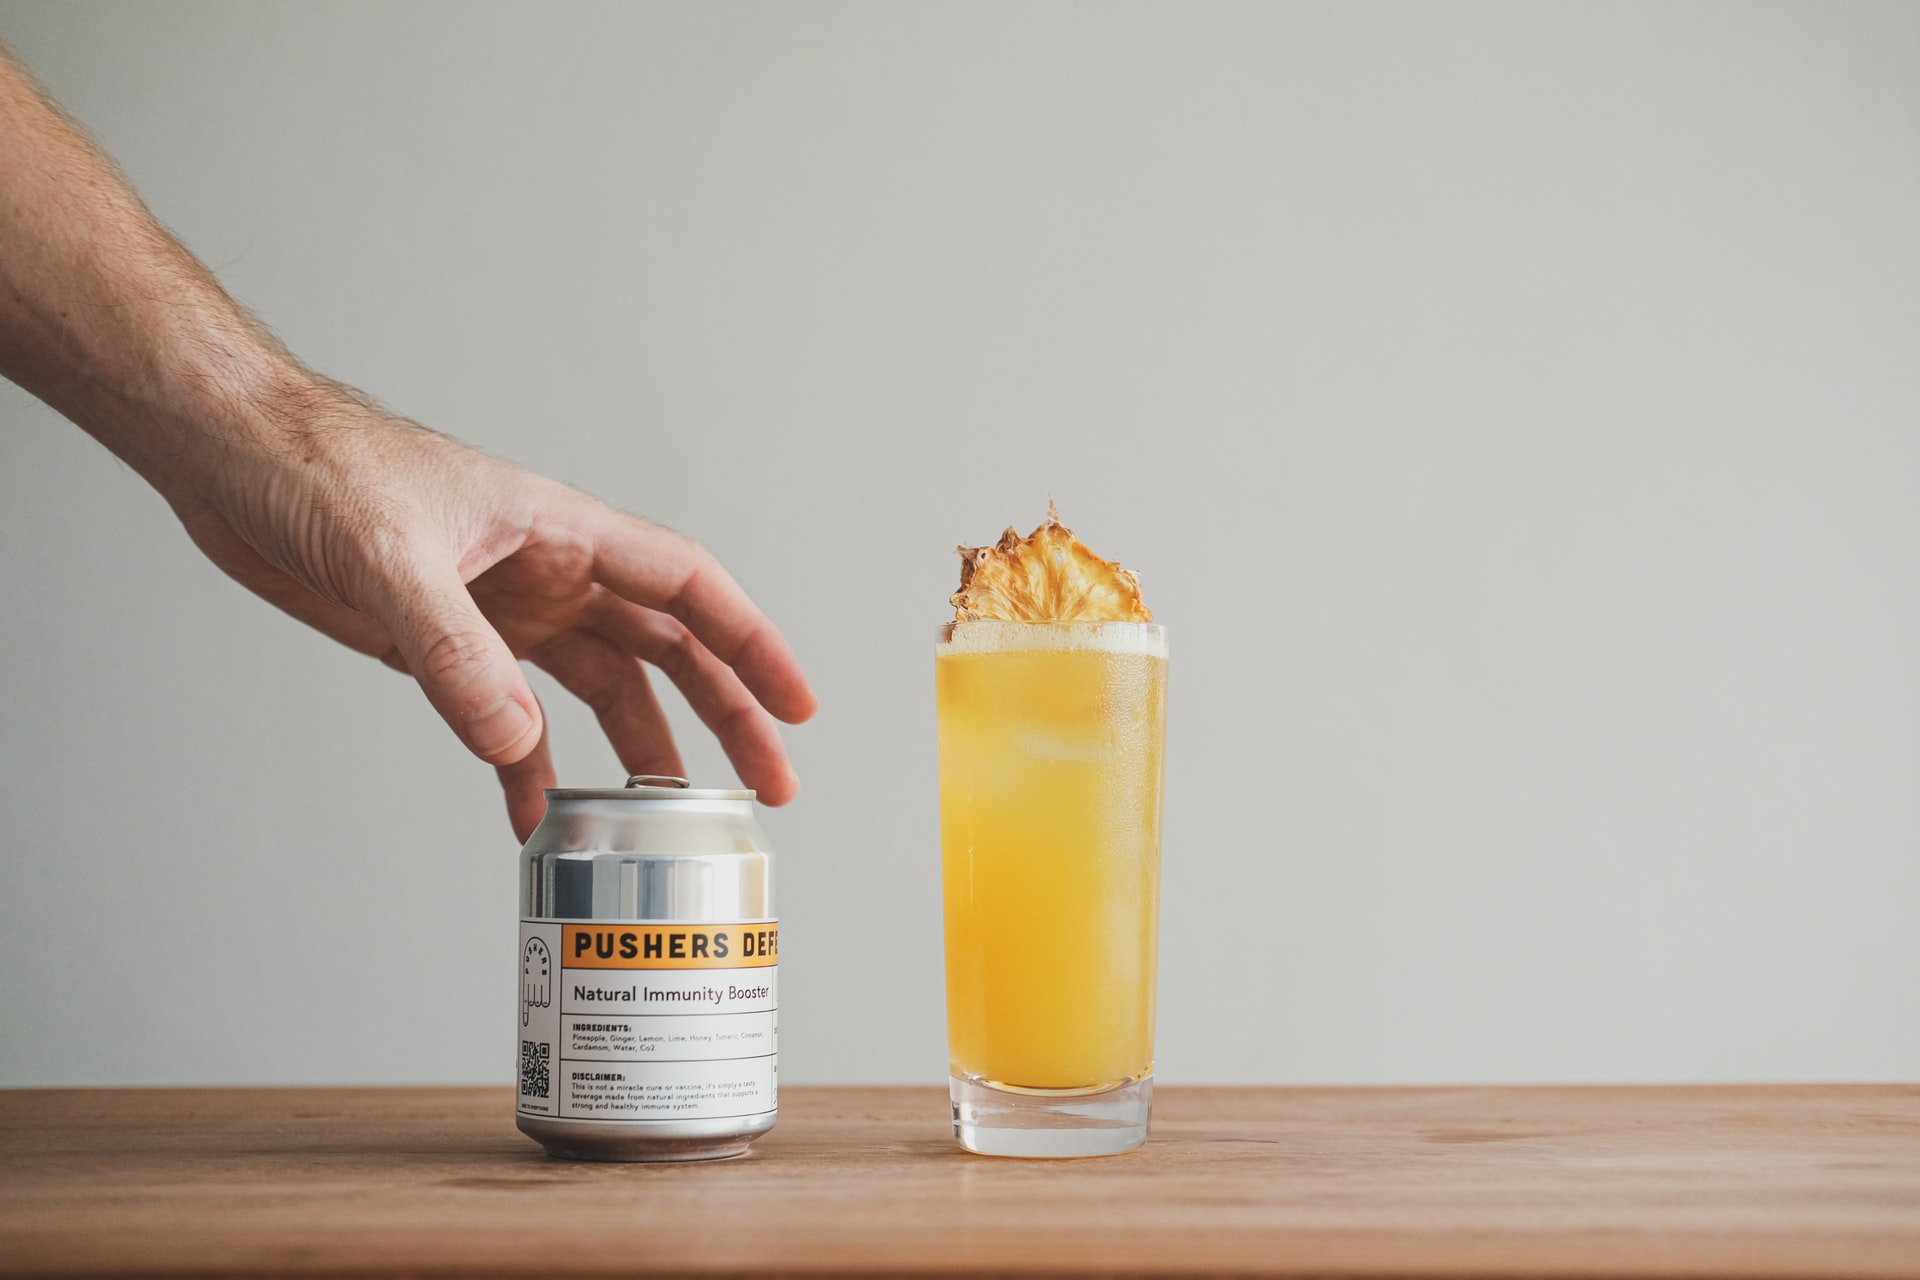 Pineapple Rum Cocktail